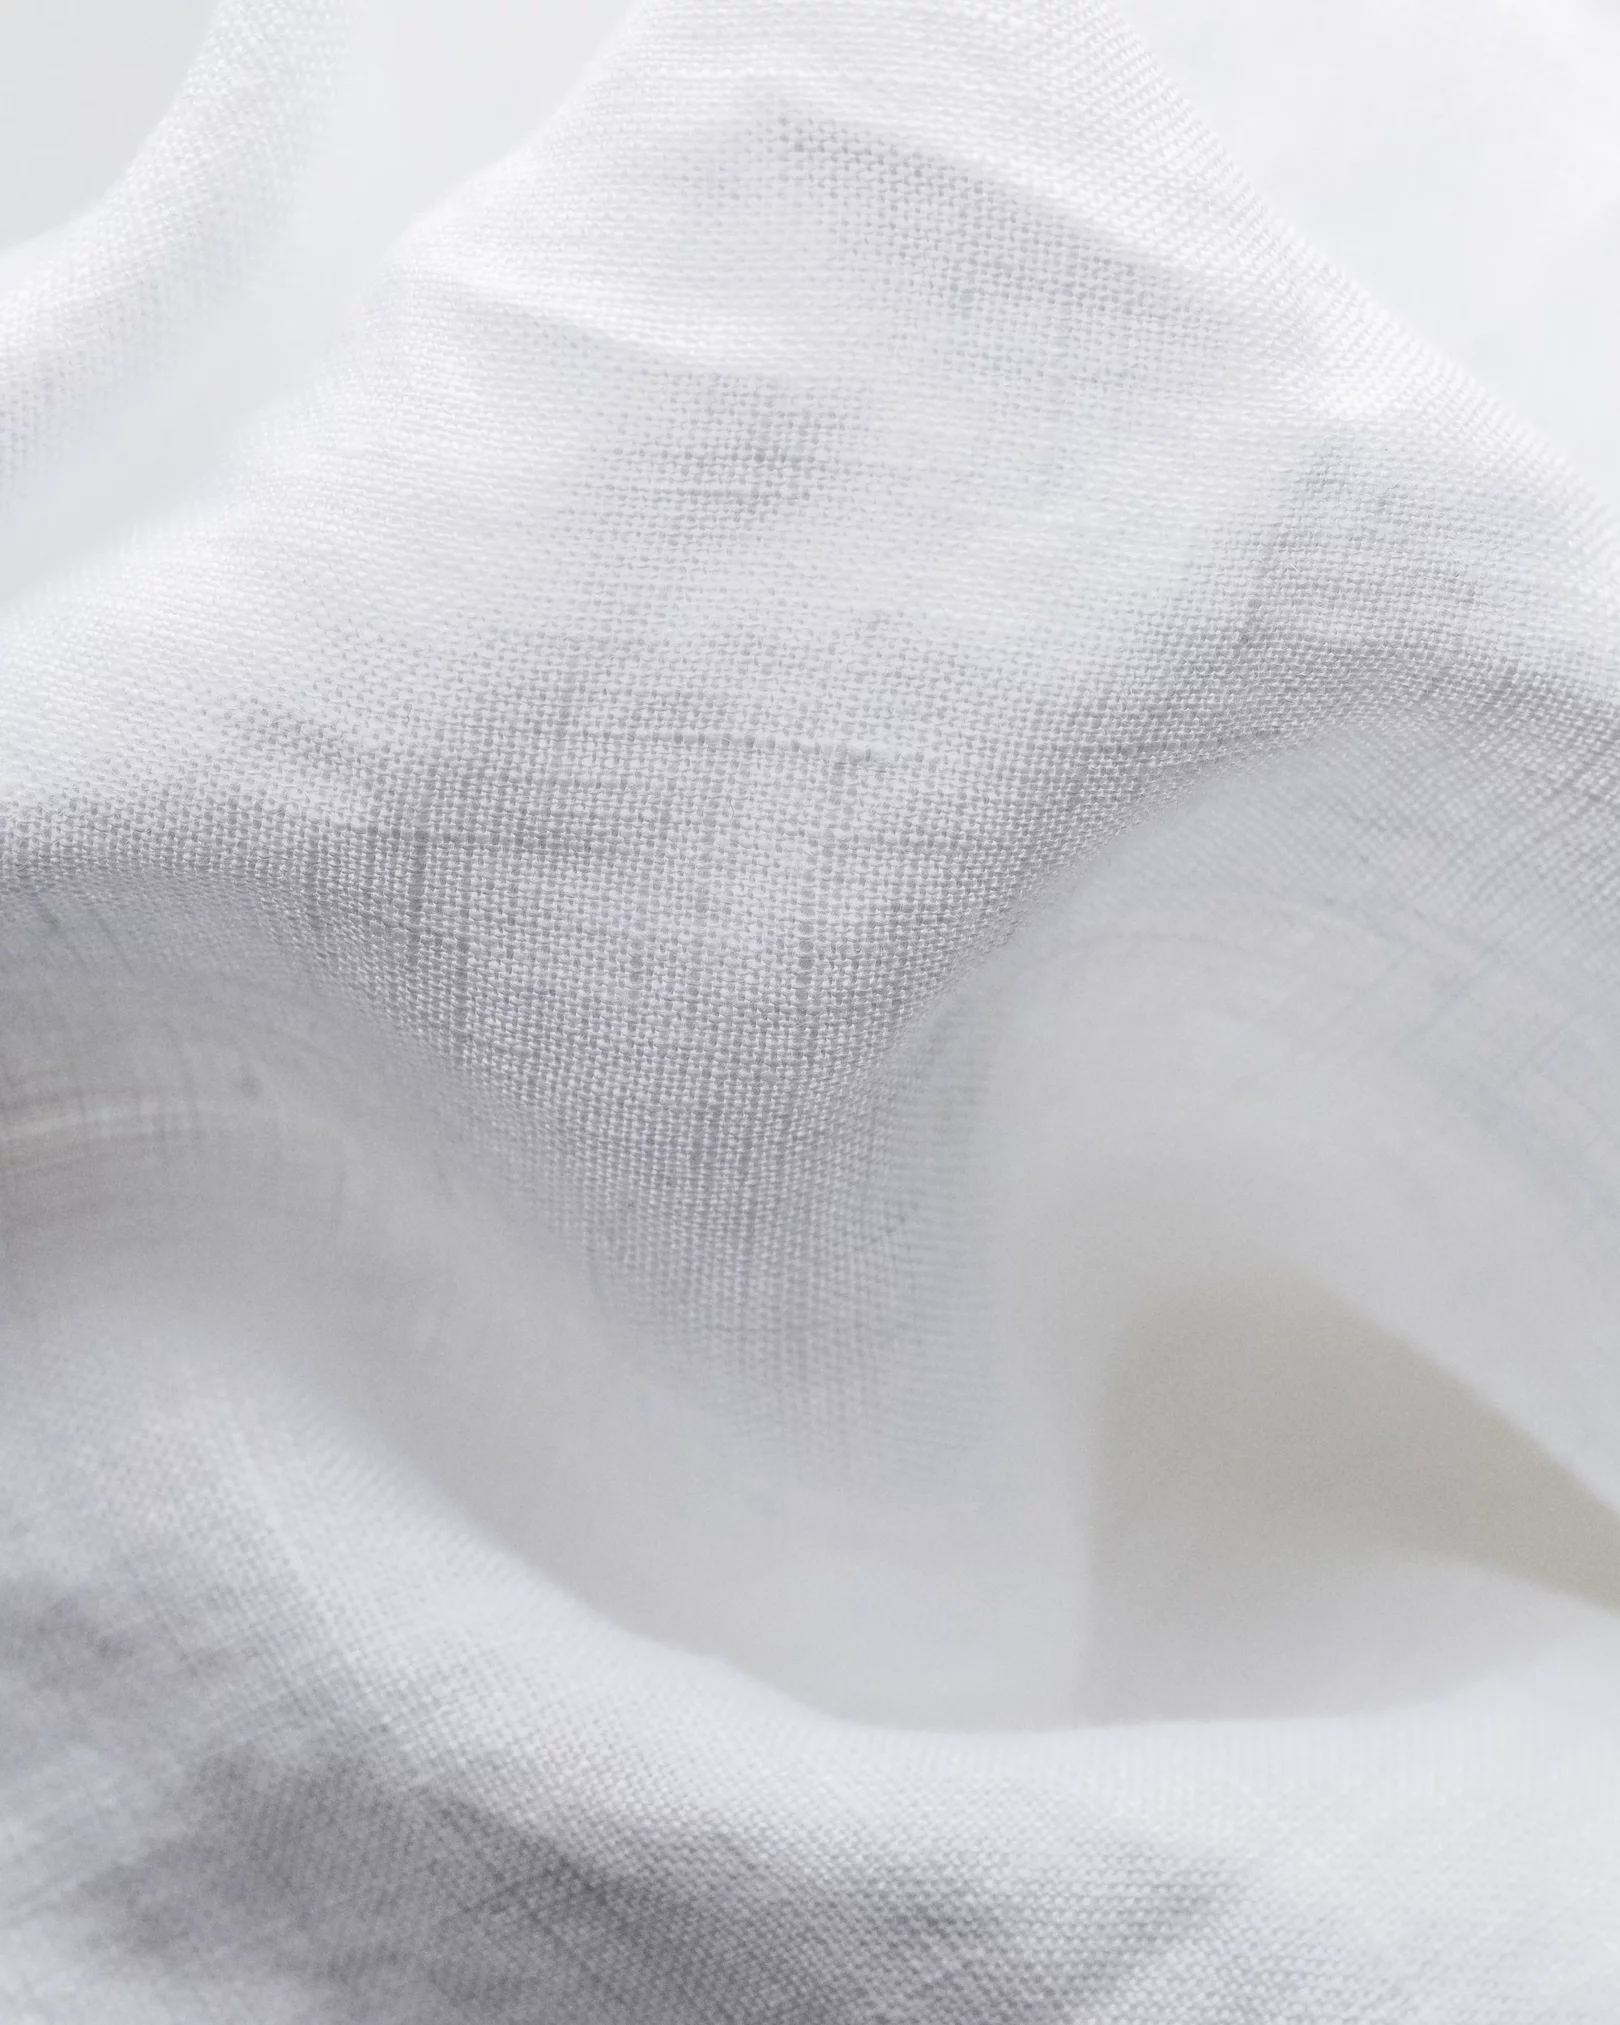 Eton - white linen shirt wide spread